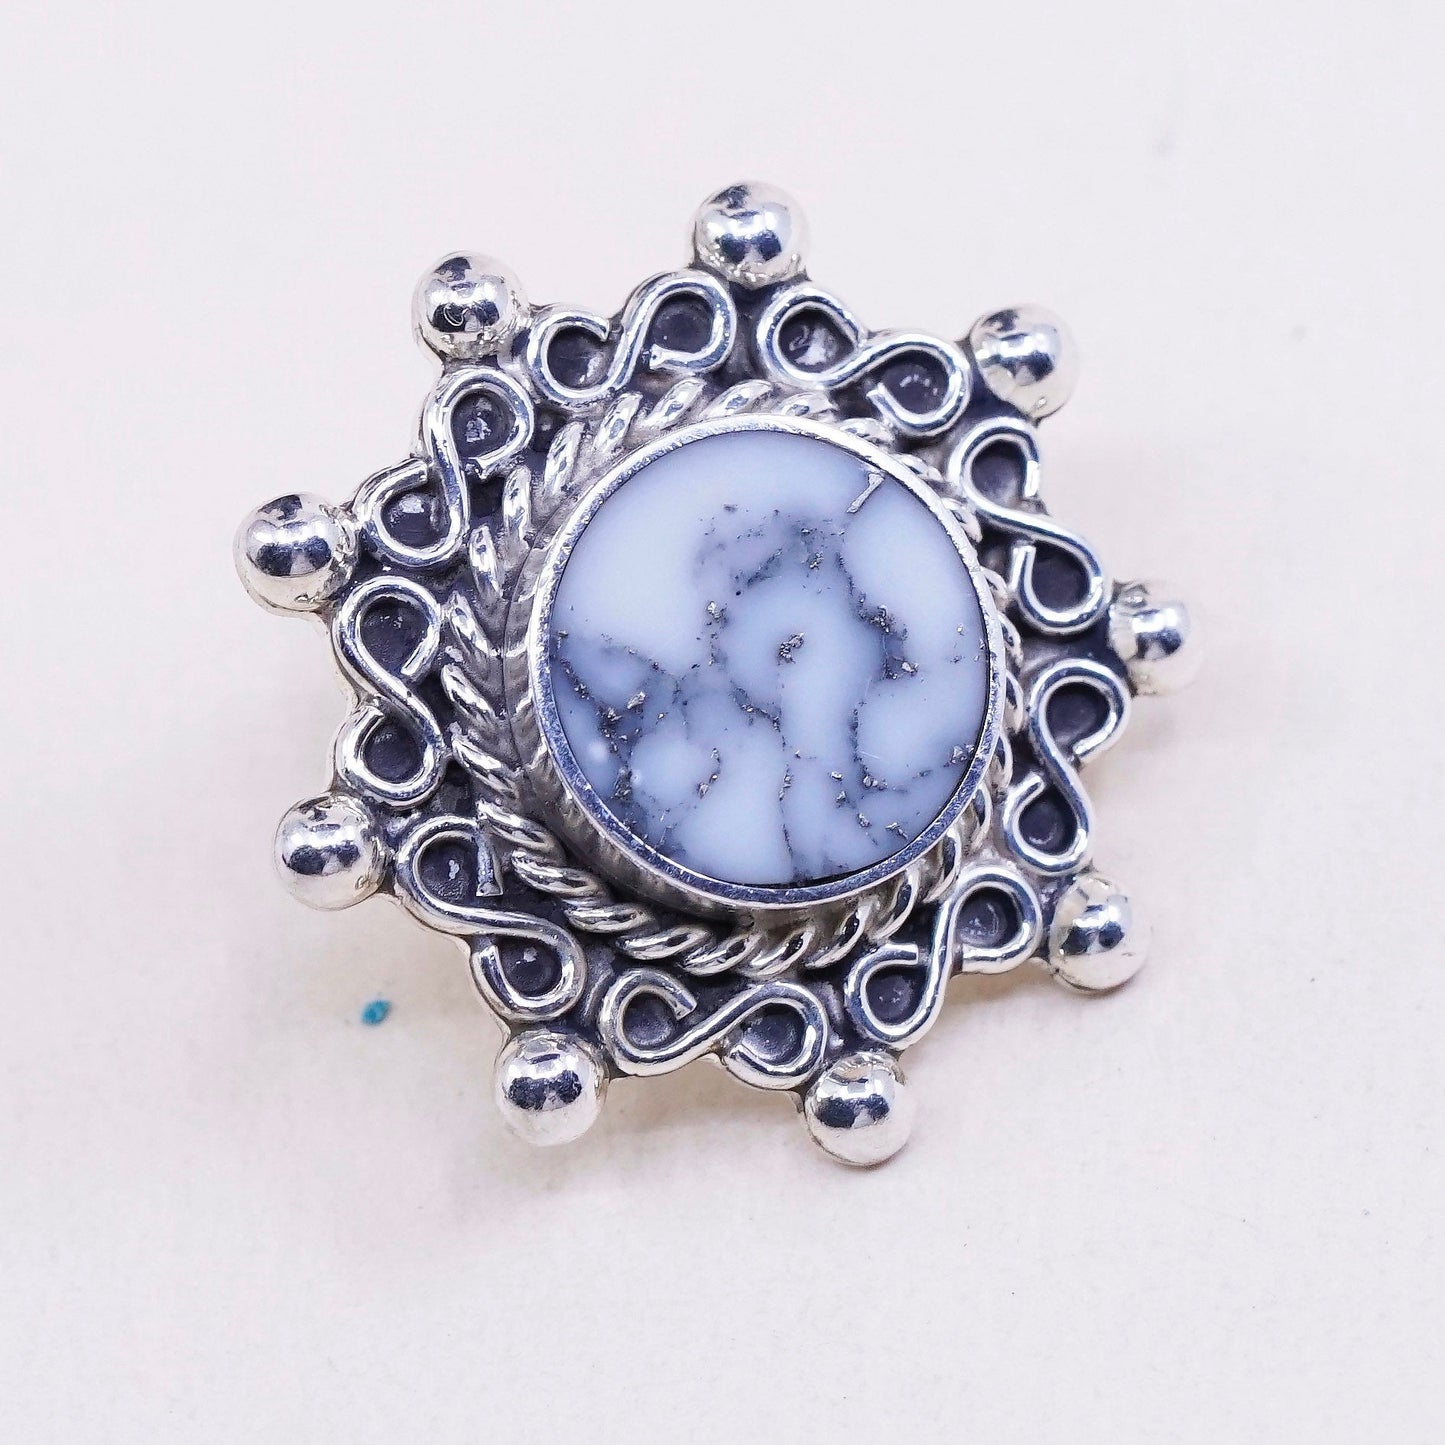 Mexico Sterling silver handmade earrings southwestern 925 studs w/ marble resin